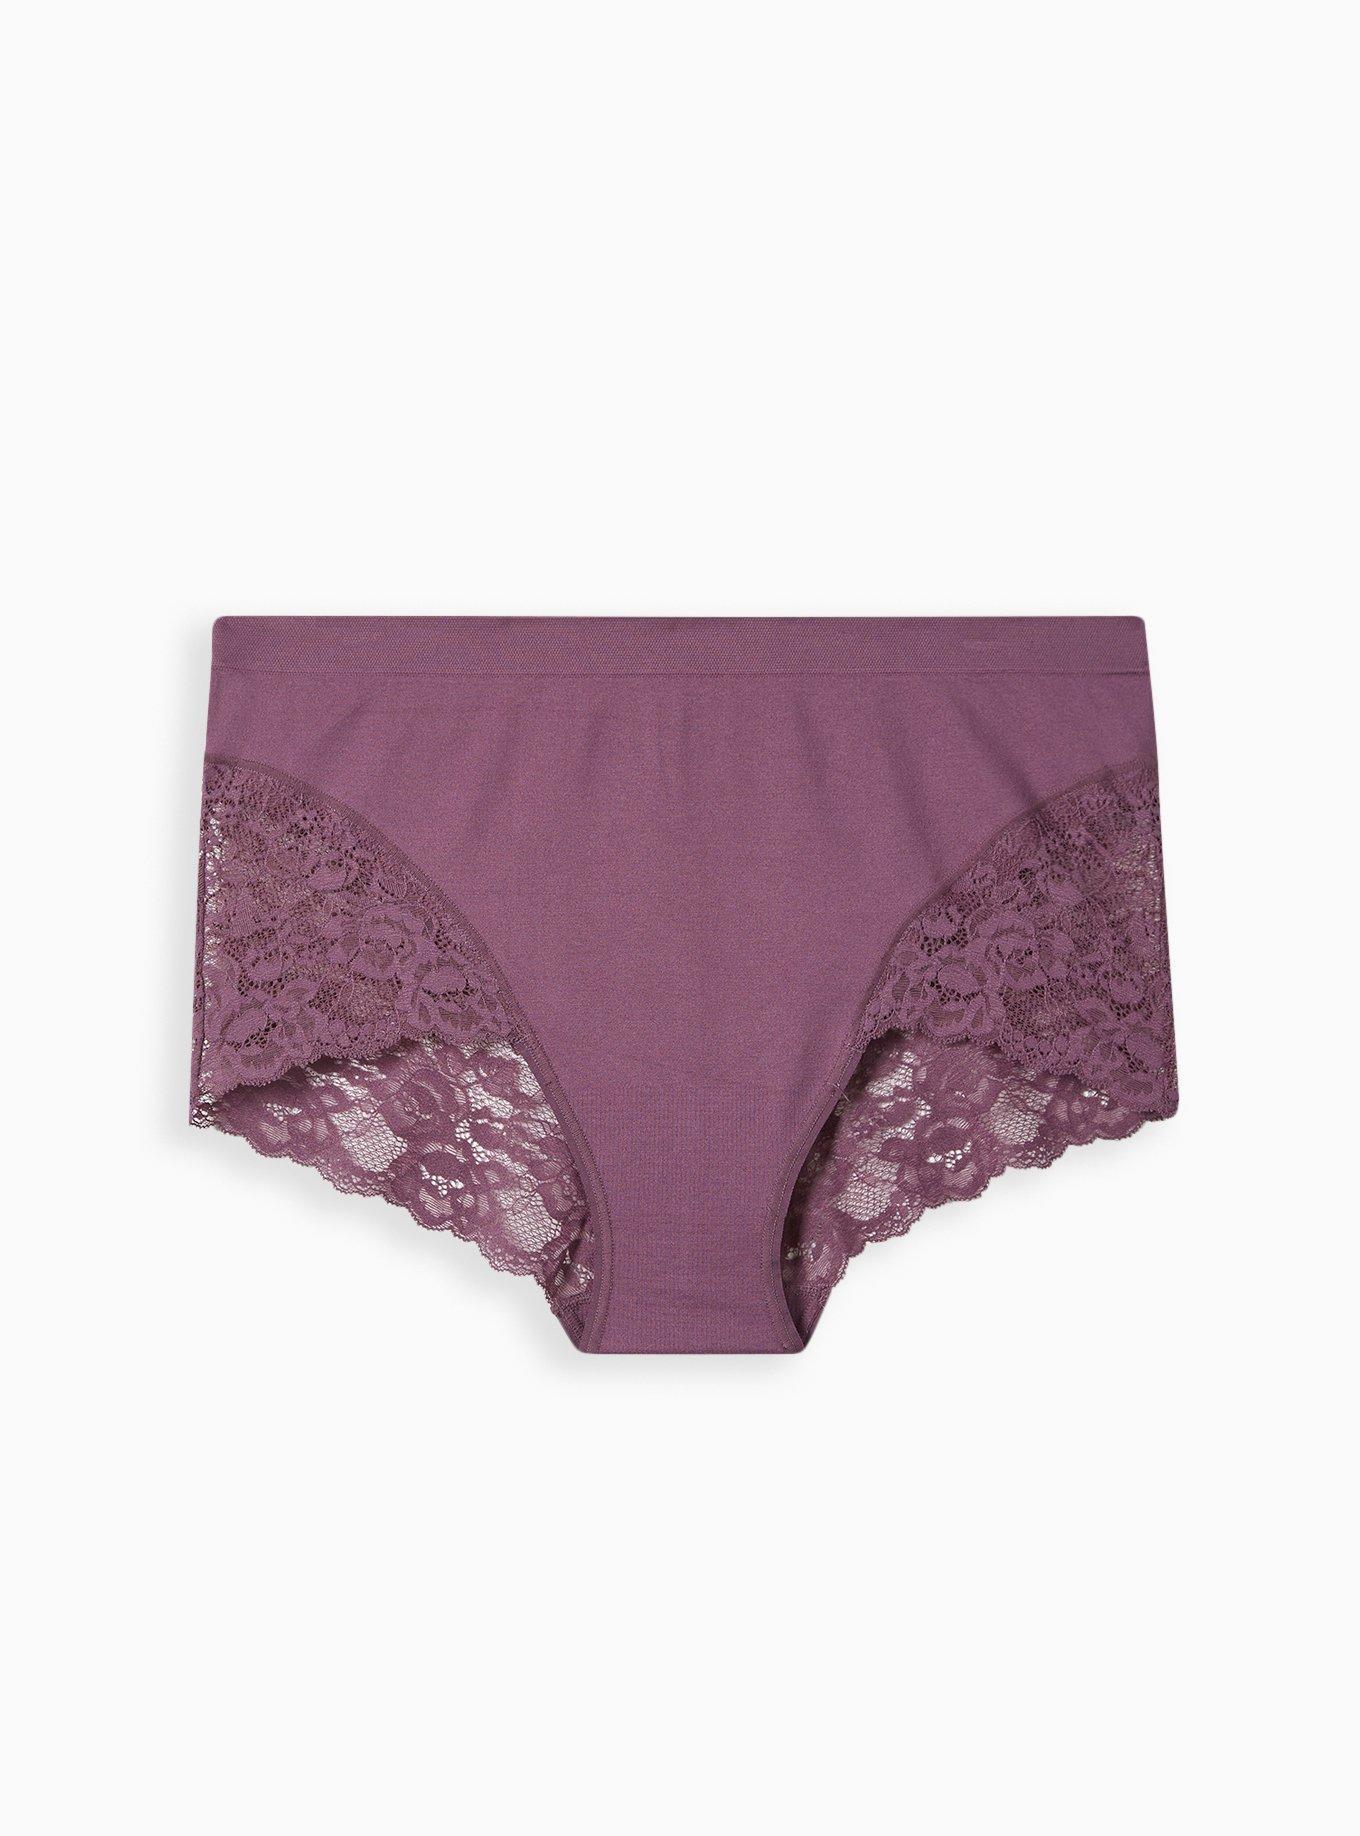 Ackermans - Give your underwear drawer a flirty upgrade